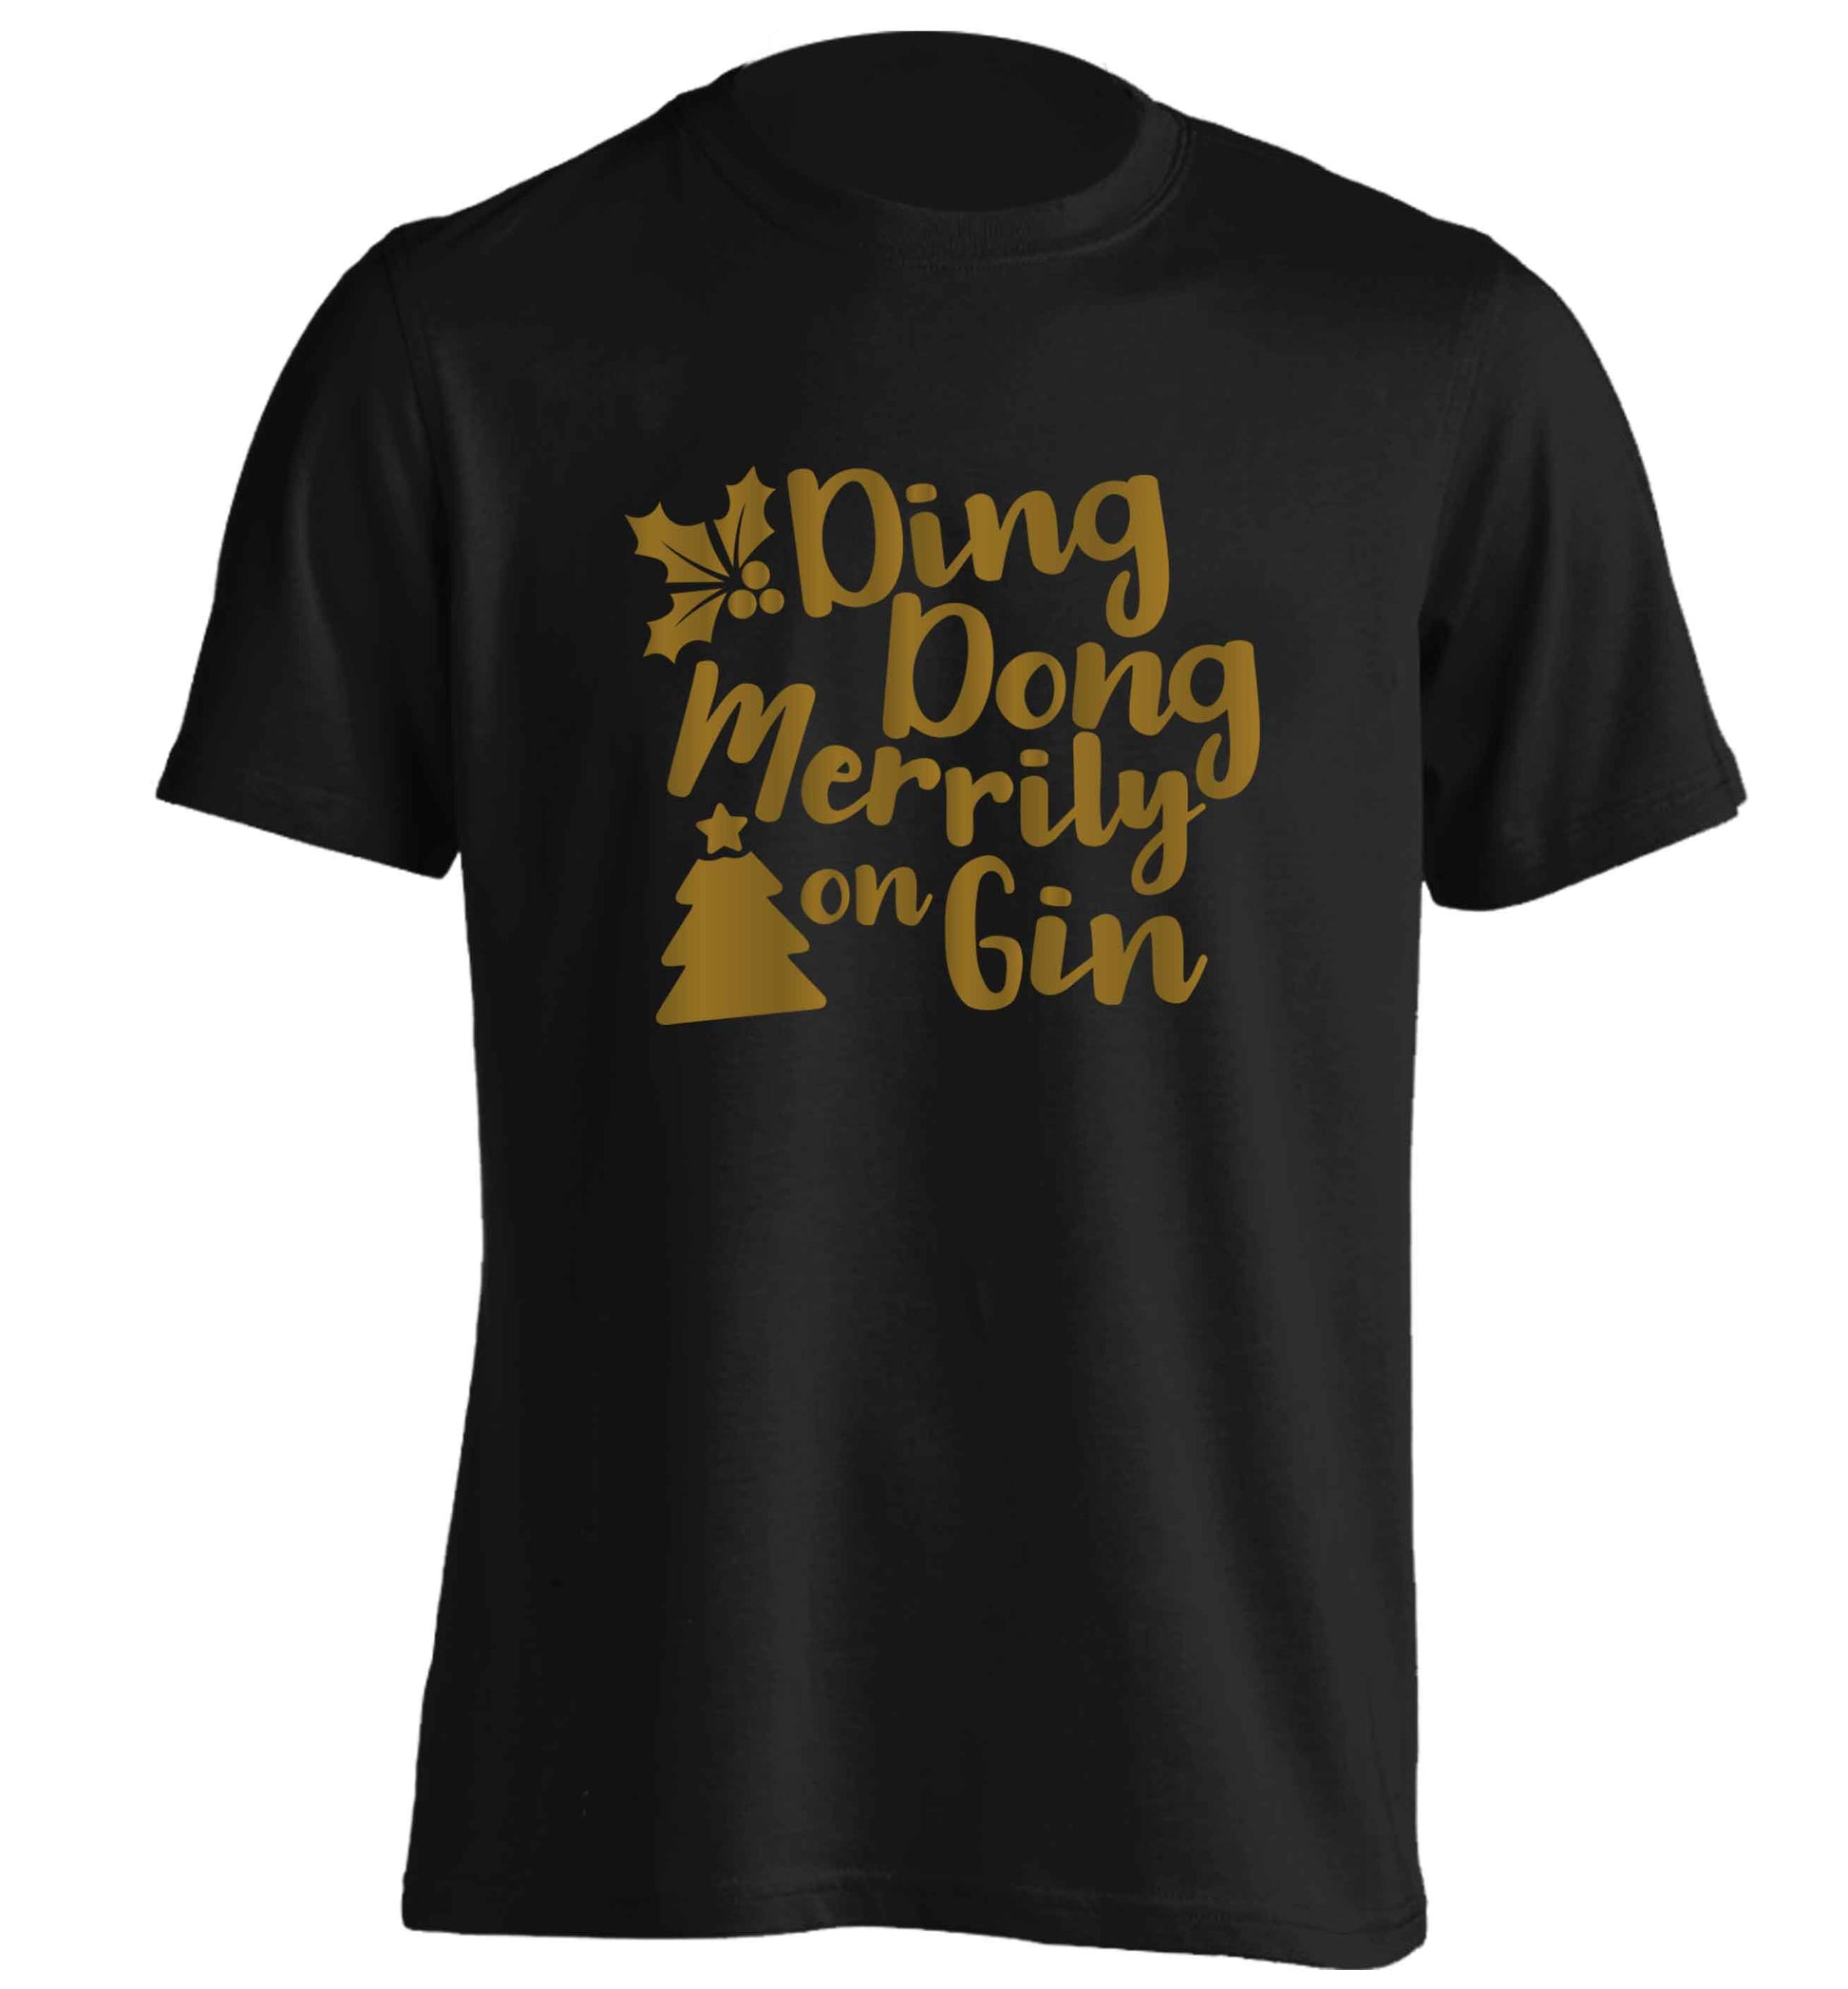 Ding dong merrily on gin adults unisex black Tshirt 2XL